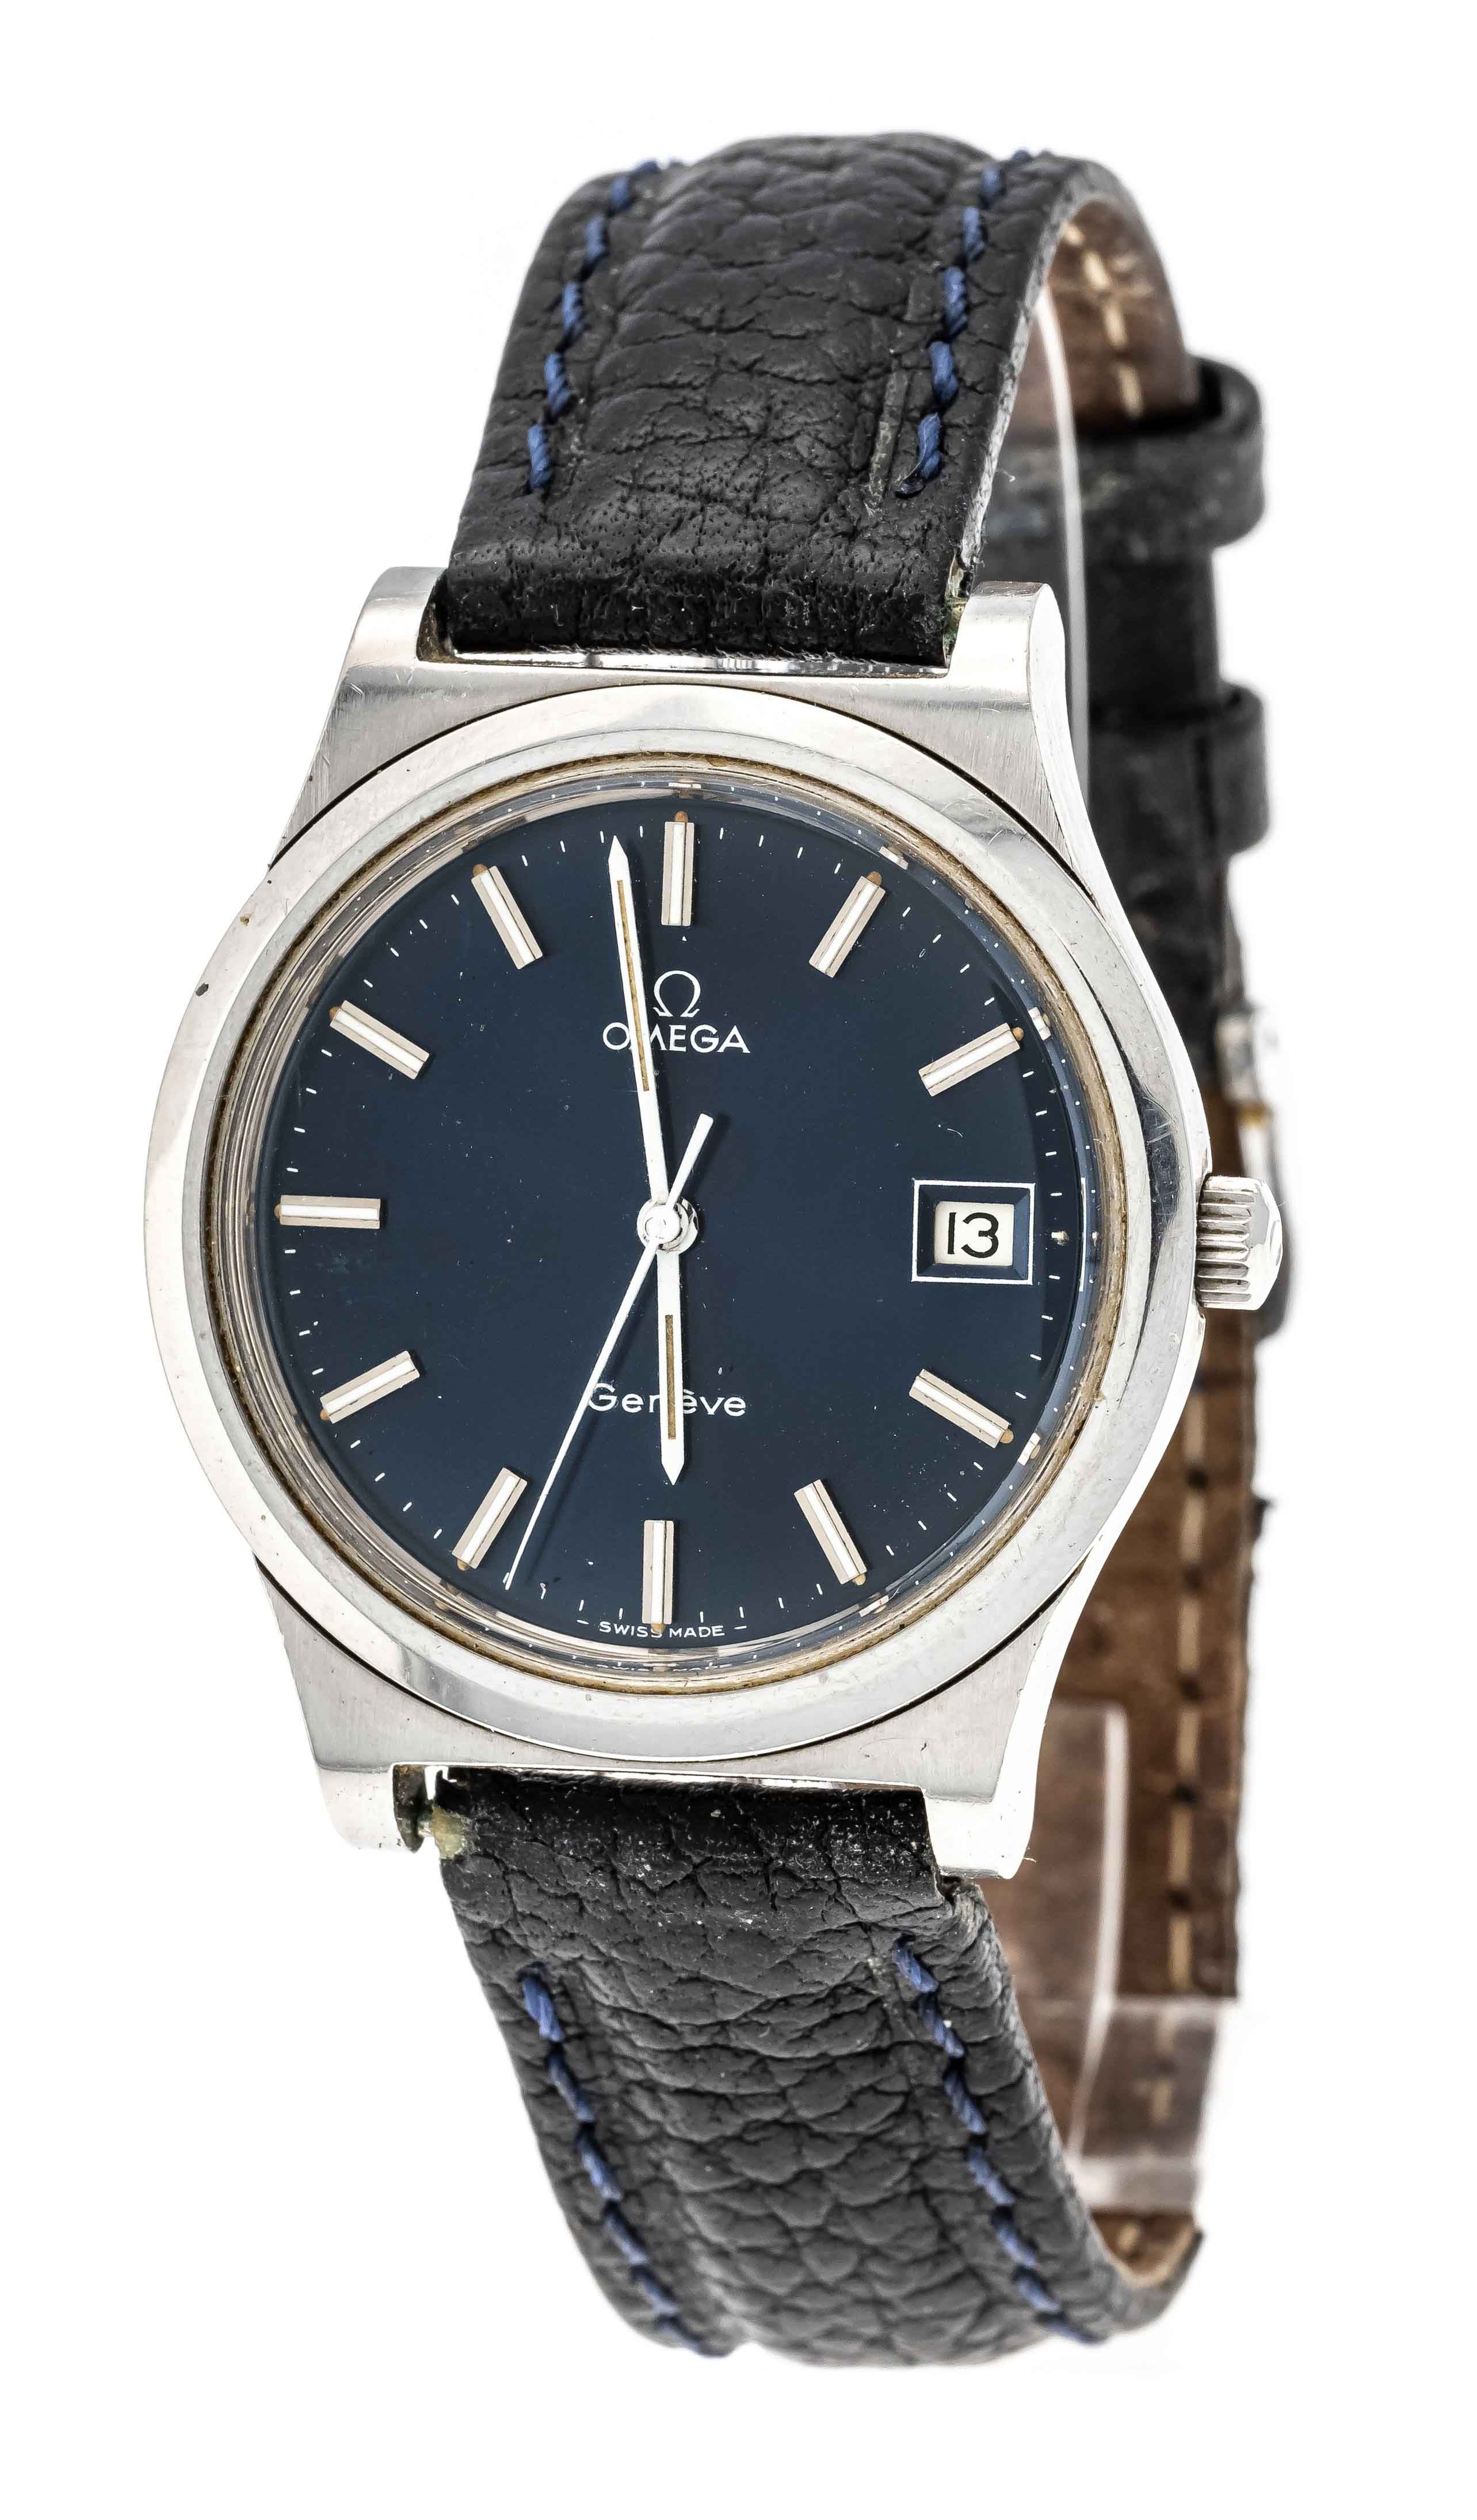 Omega men's watch manual winding, Ref. 136.0102, steel case, movement Cal. 1030 runs exactly, blue